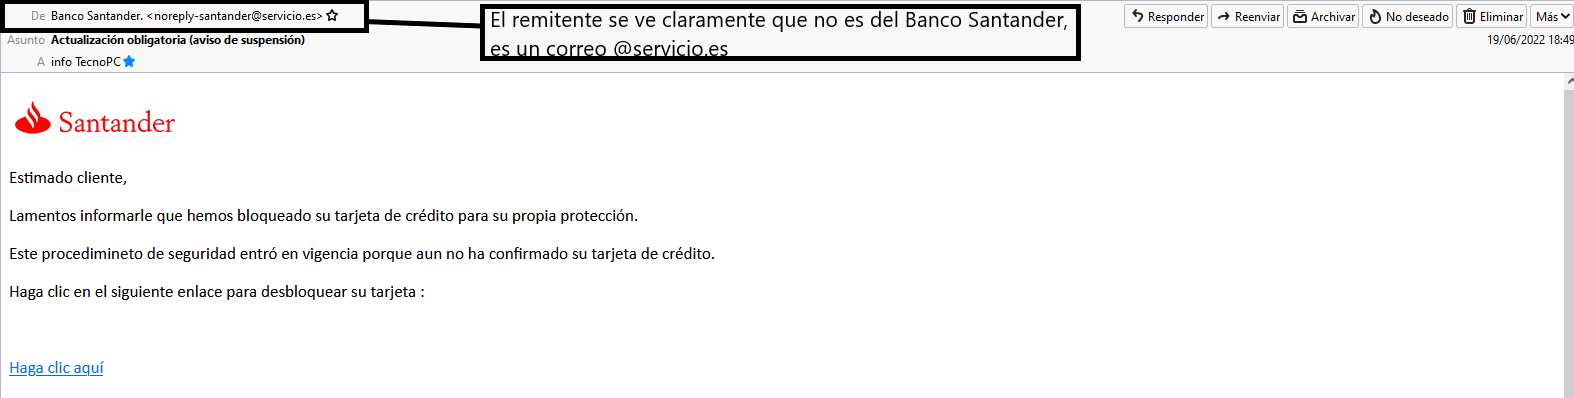 Phising Banco Santander